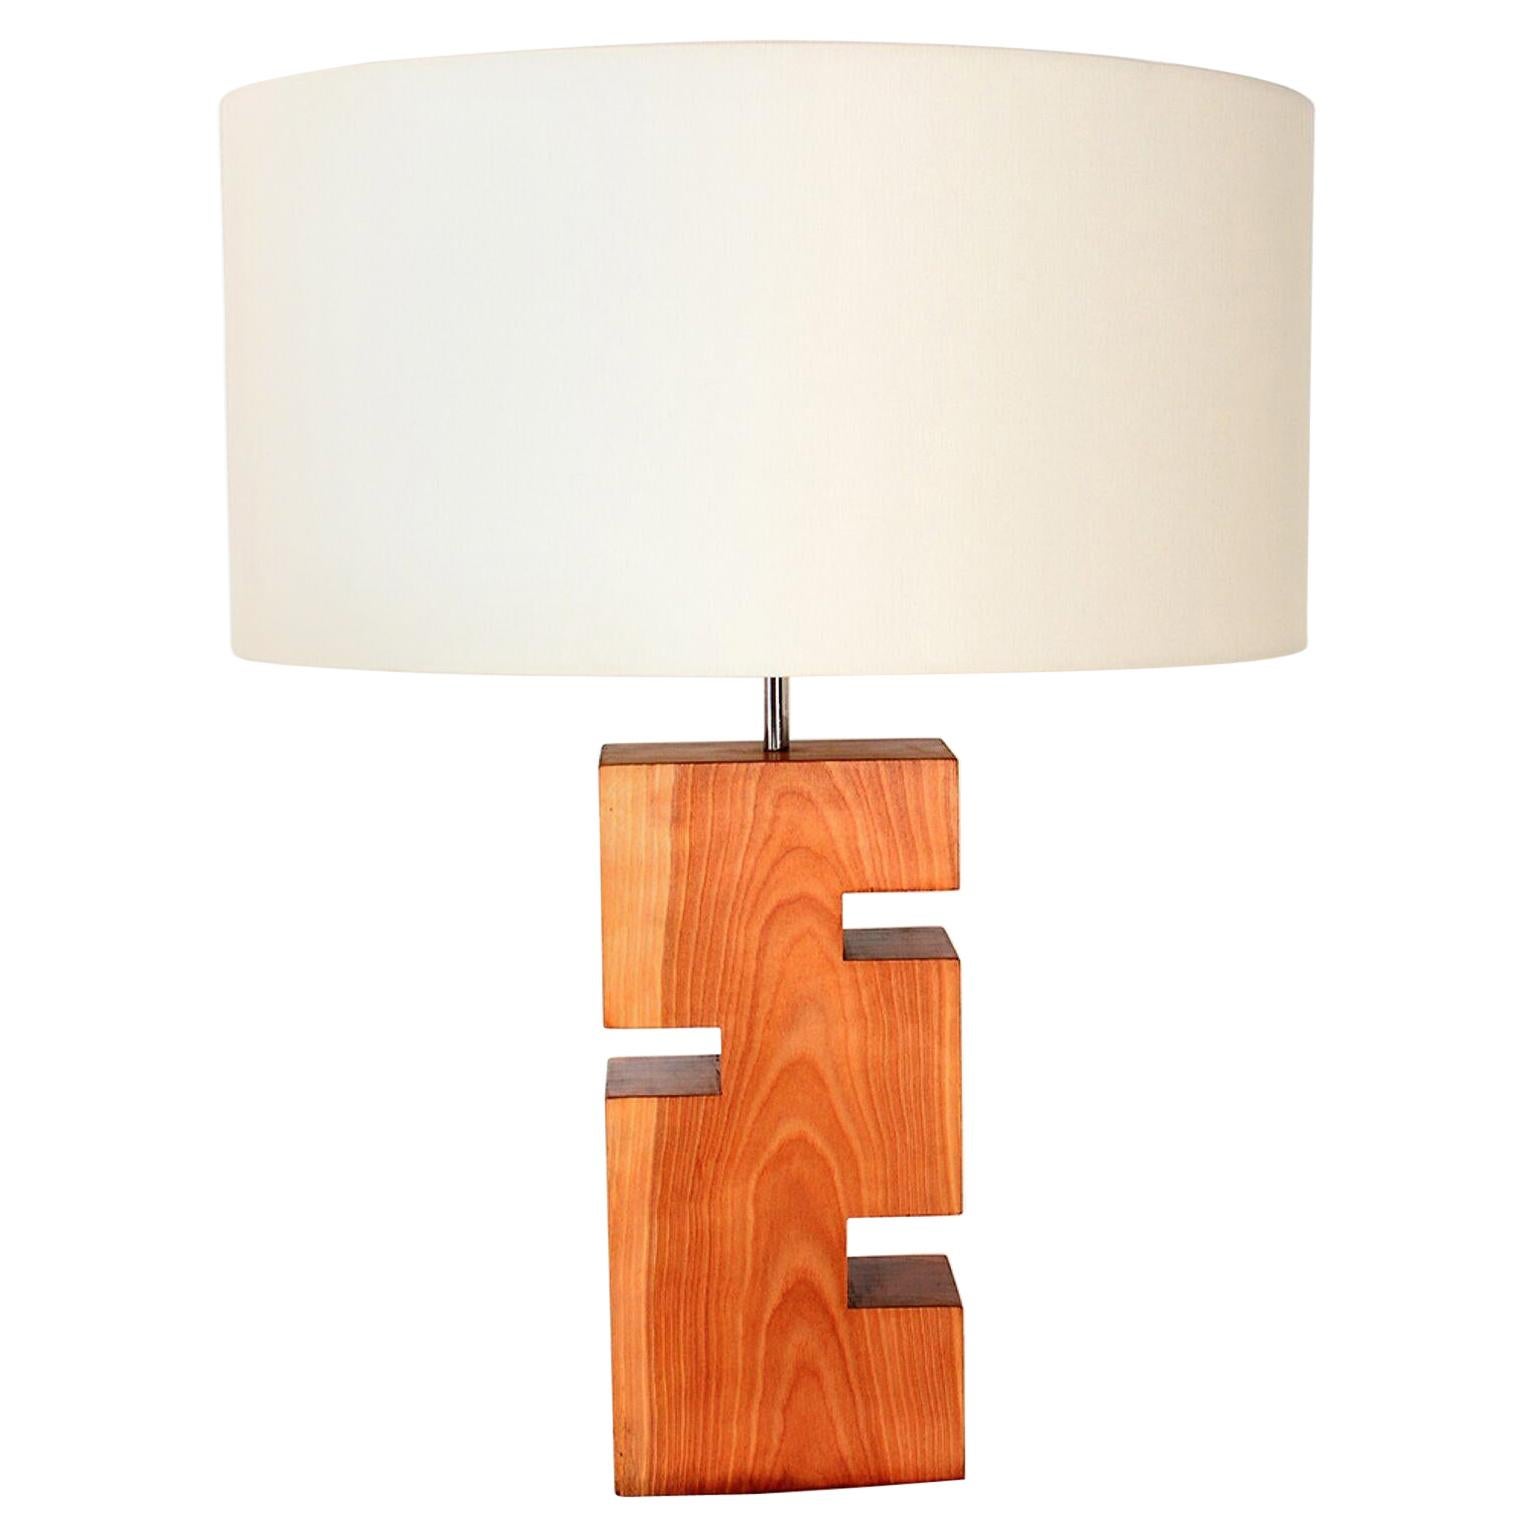 Modern Geometric Wood Block Table Lamp, Wooden Block Table Lamp